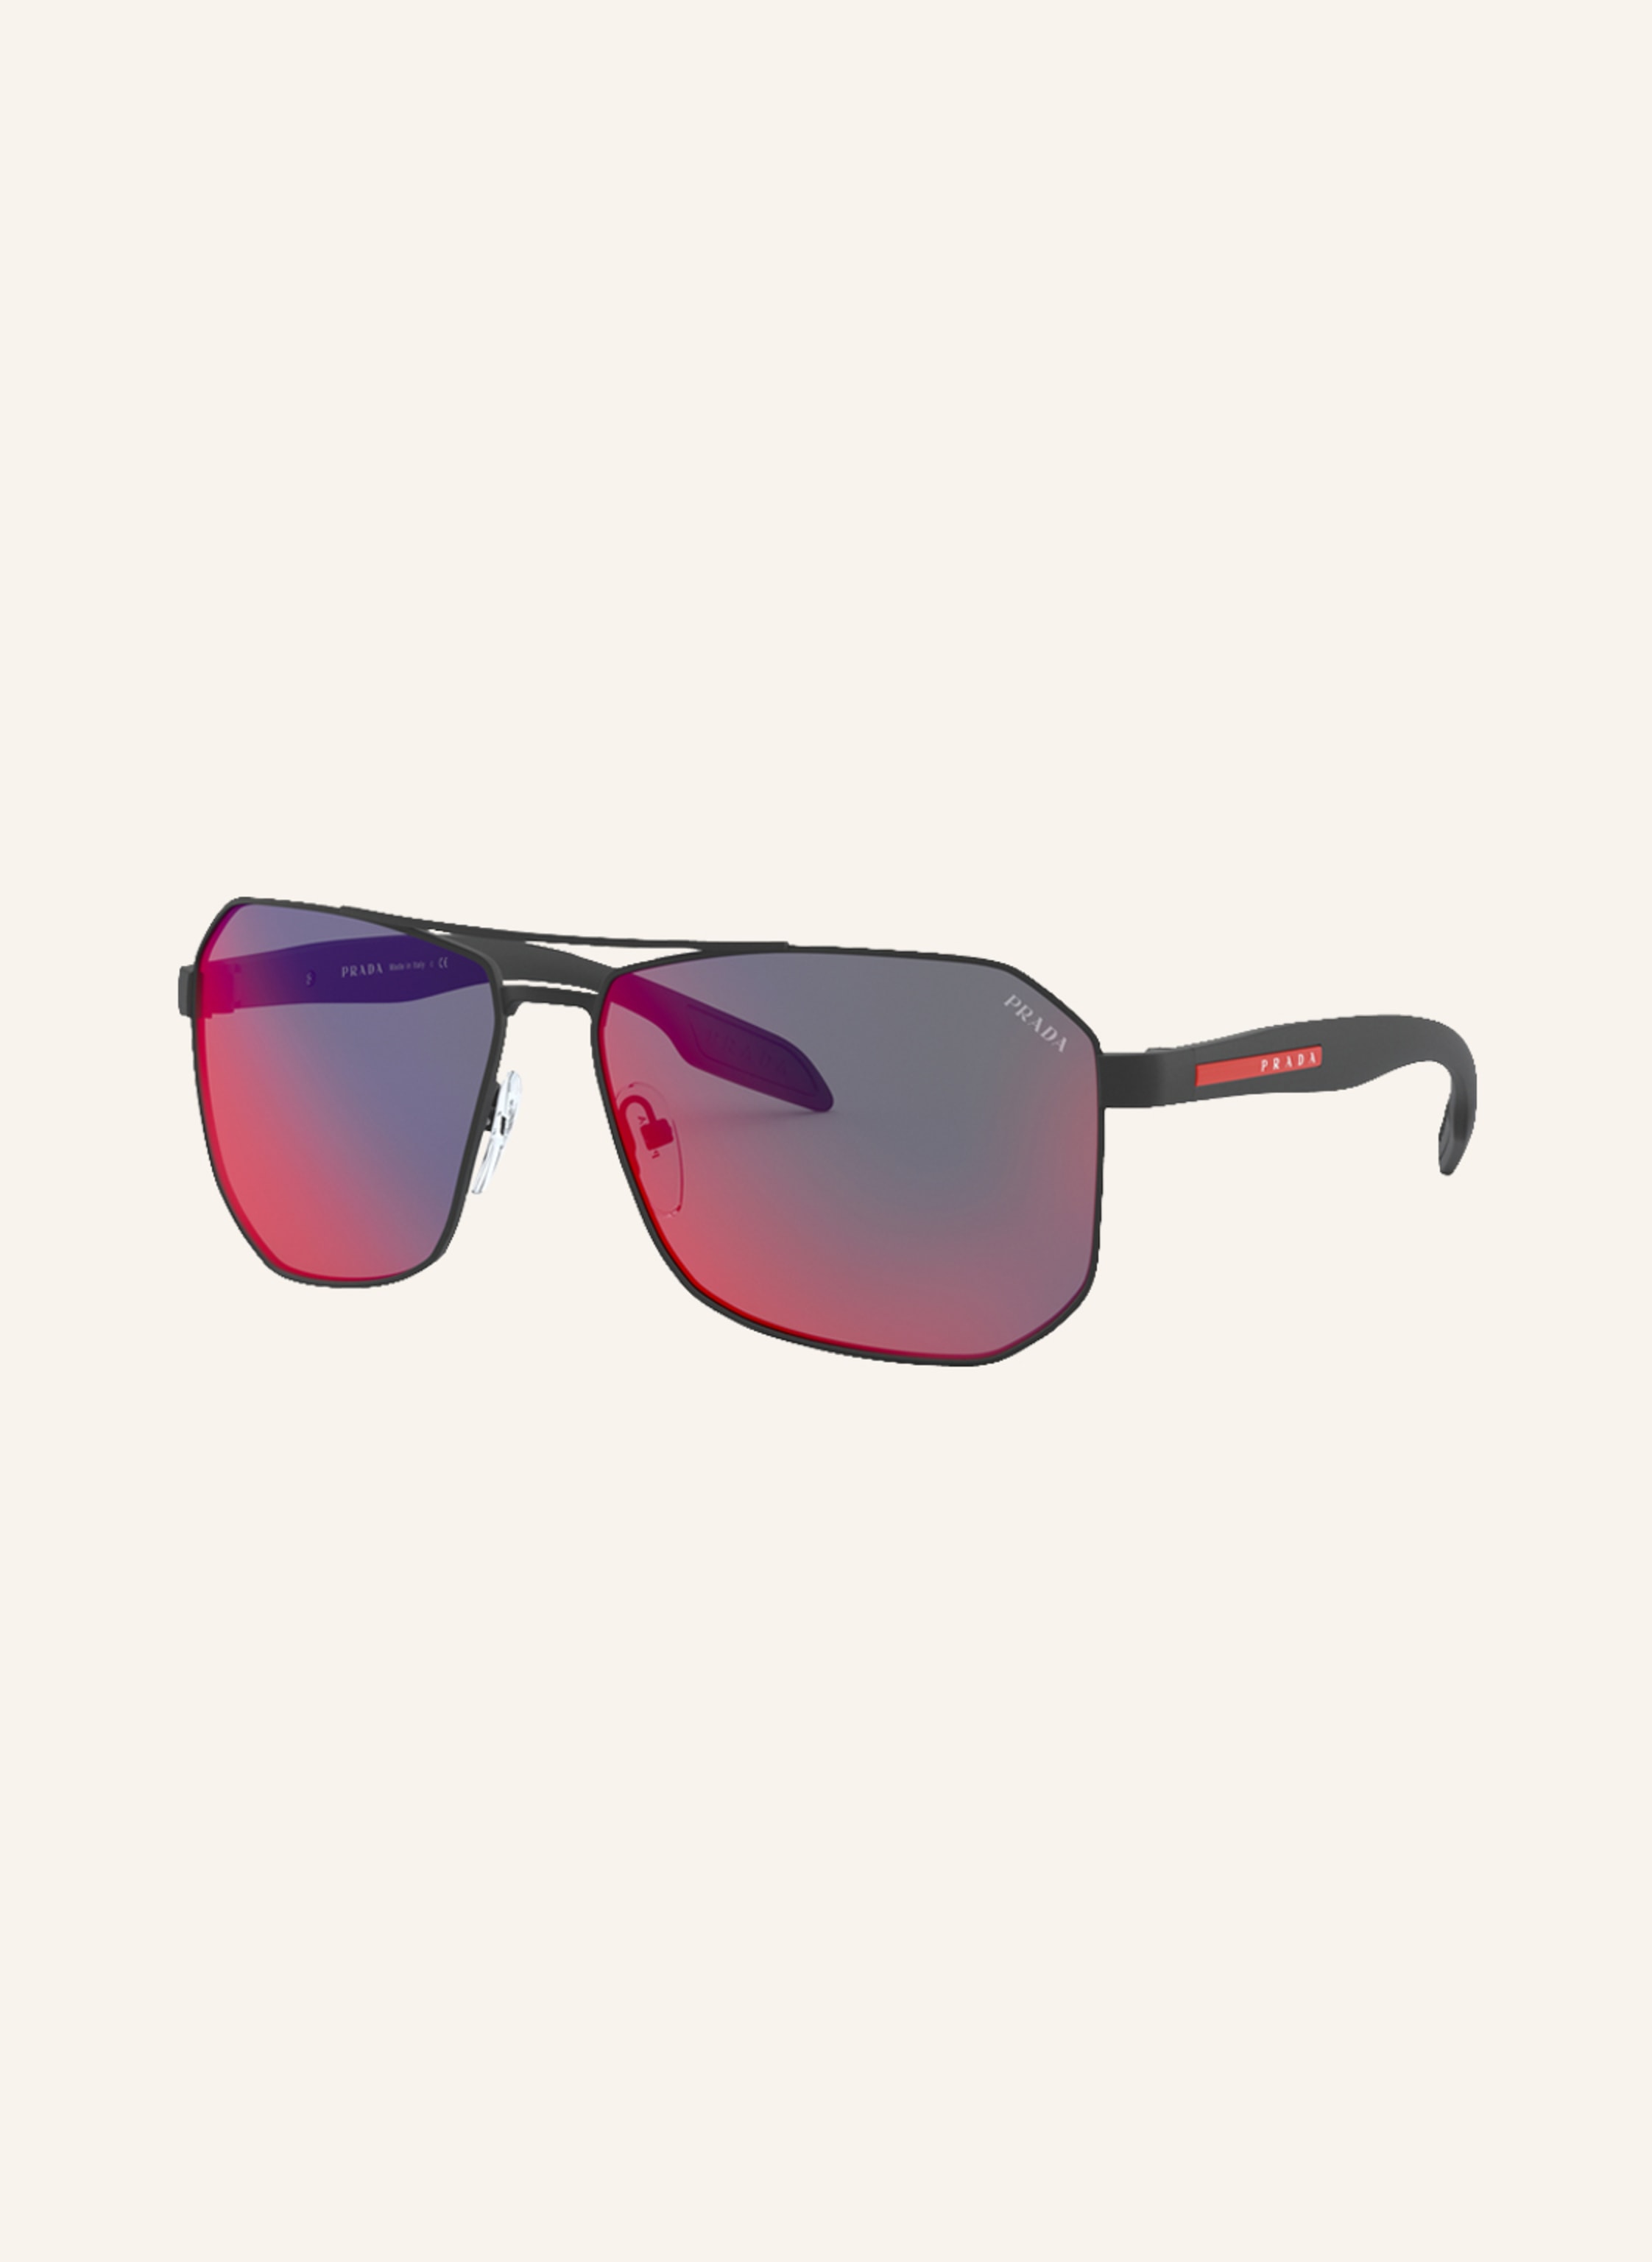 PRADA Sunglasses PS 51VS in dg09q1 - black/ pink | Breuninger